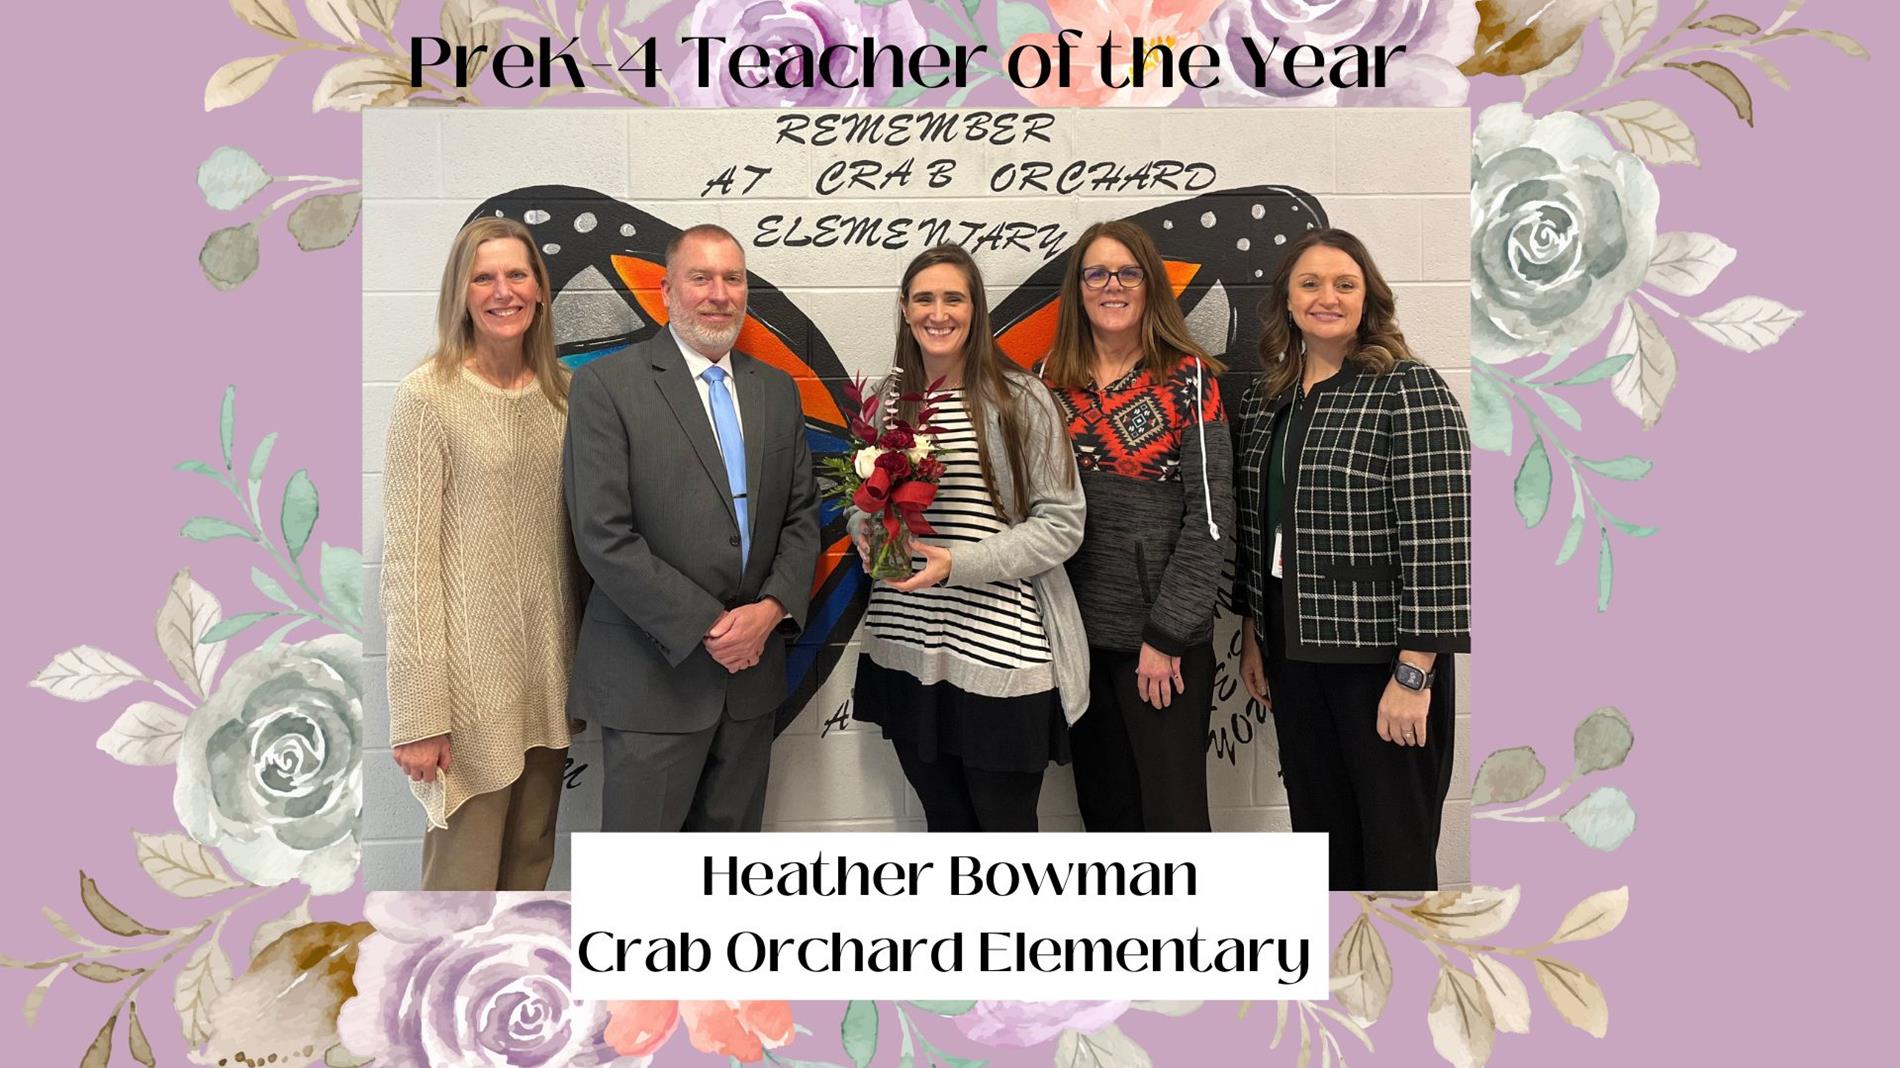 Teacher of the Year PreK-4 Heather Bowman